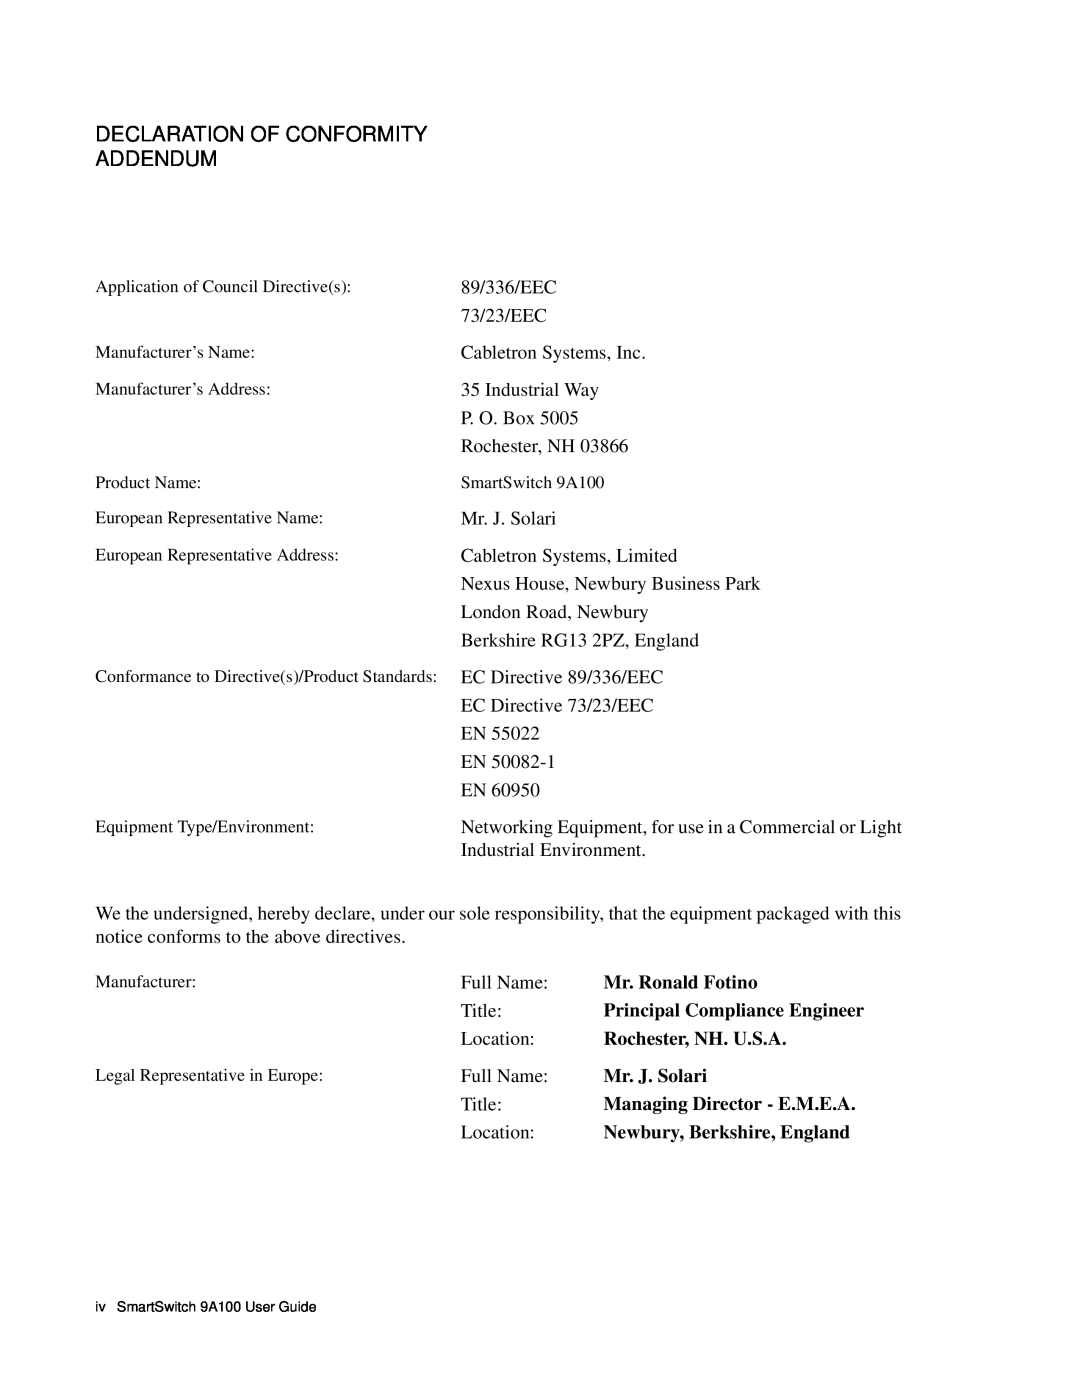 Cabletron Systems 9A100 manual Declaration Of Conformity Addendum, Mr. Ronald Fotino, Rochester, NH. U.S.A, Mr. J. Solari 